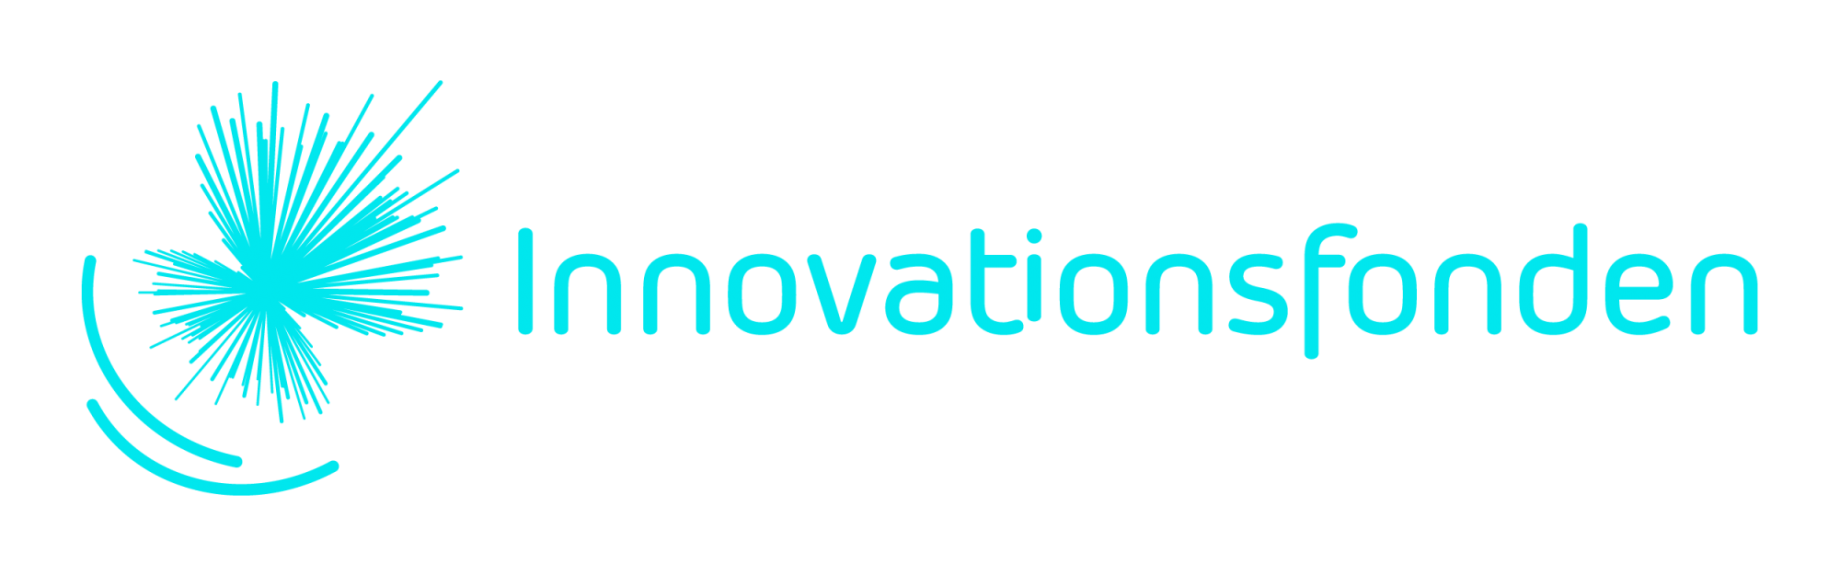 Innovation Foundation logo